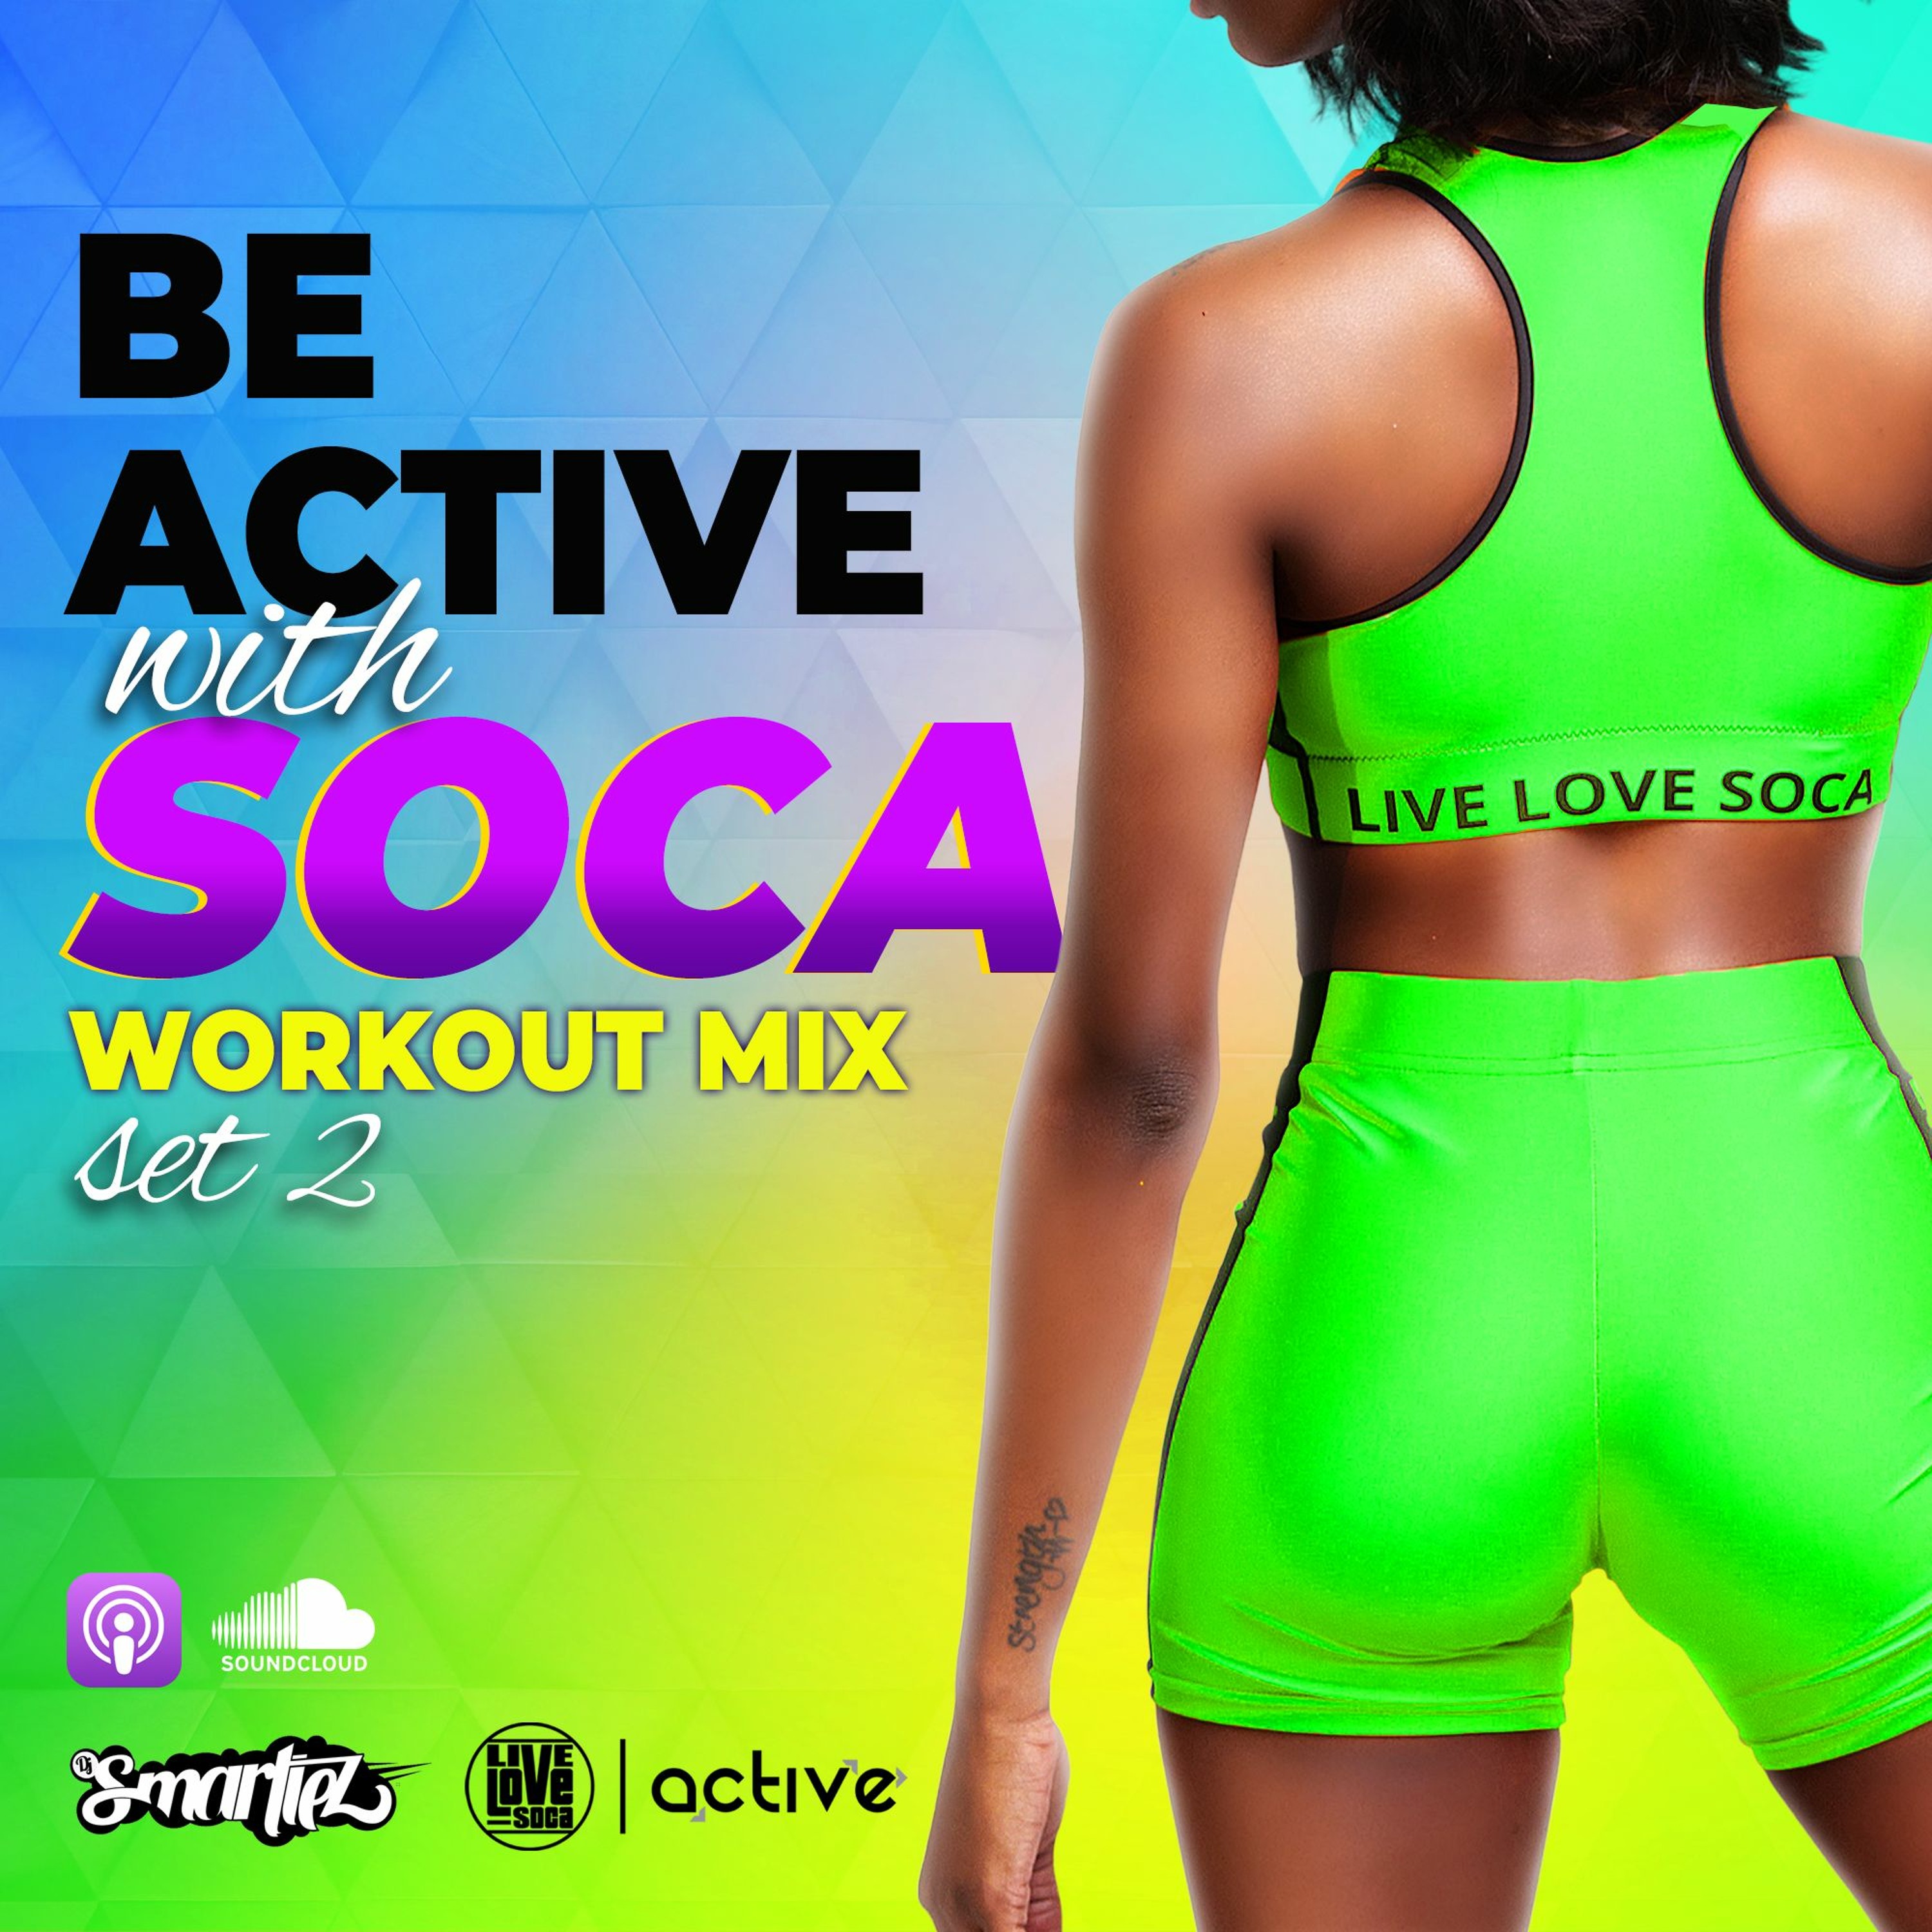 Be Active With Soca - Set 2 Workout Mix By Live Love Soca & DJ Smartiez